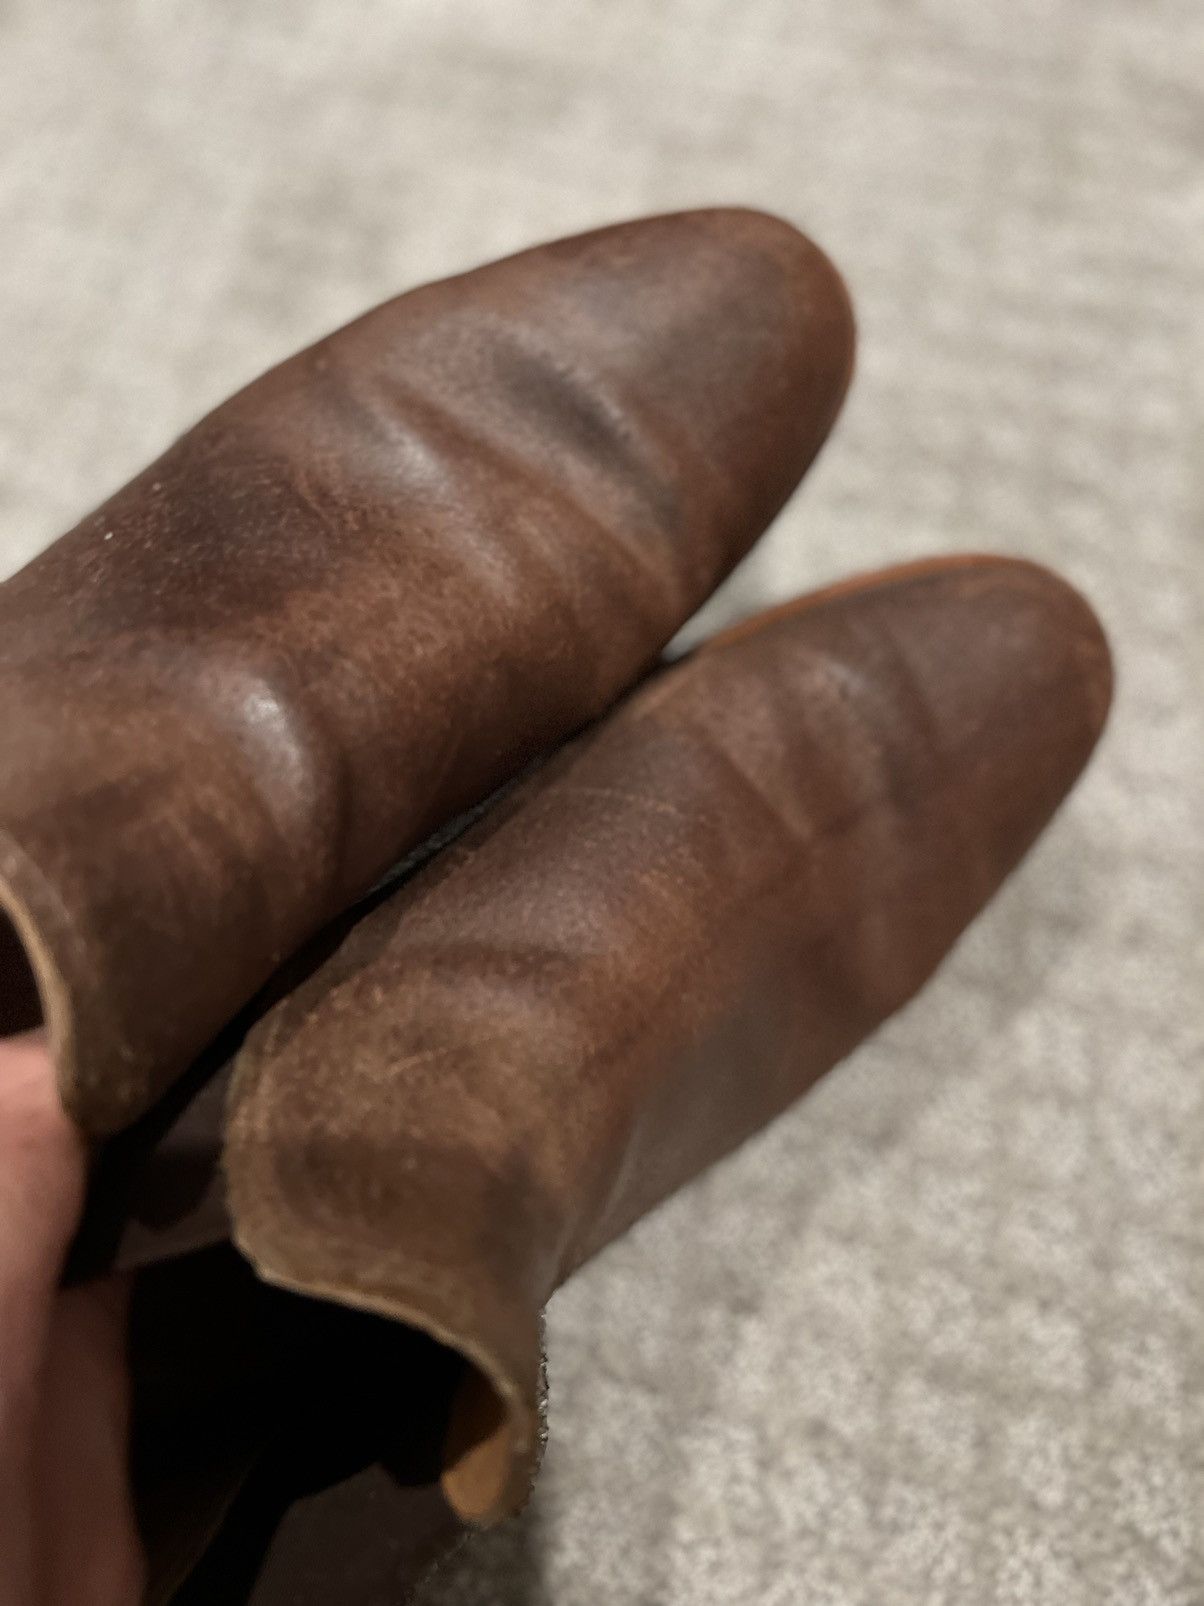 Viberg Viberg 8.5 9.5US Natural waxed flesh roughout Chelsea boots Size US 8.5 / EU 41-42 - 3 Thumbnail